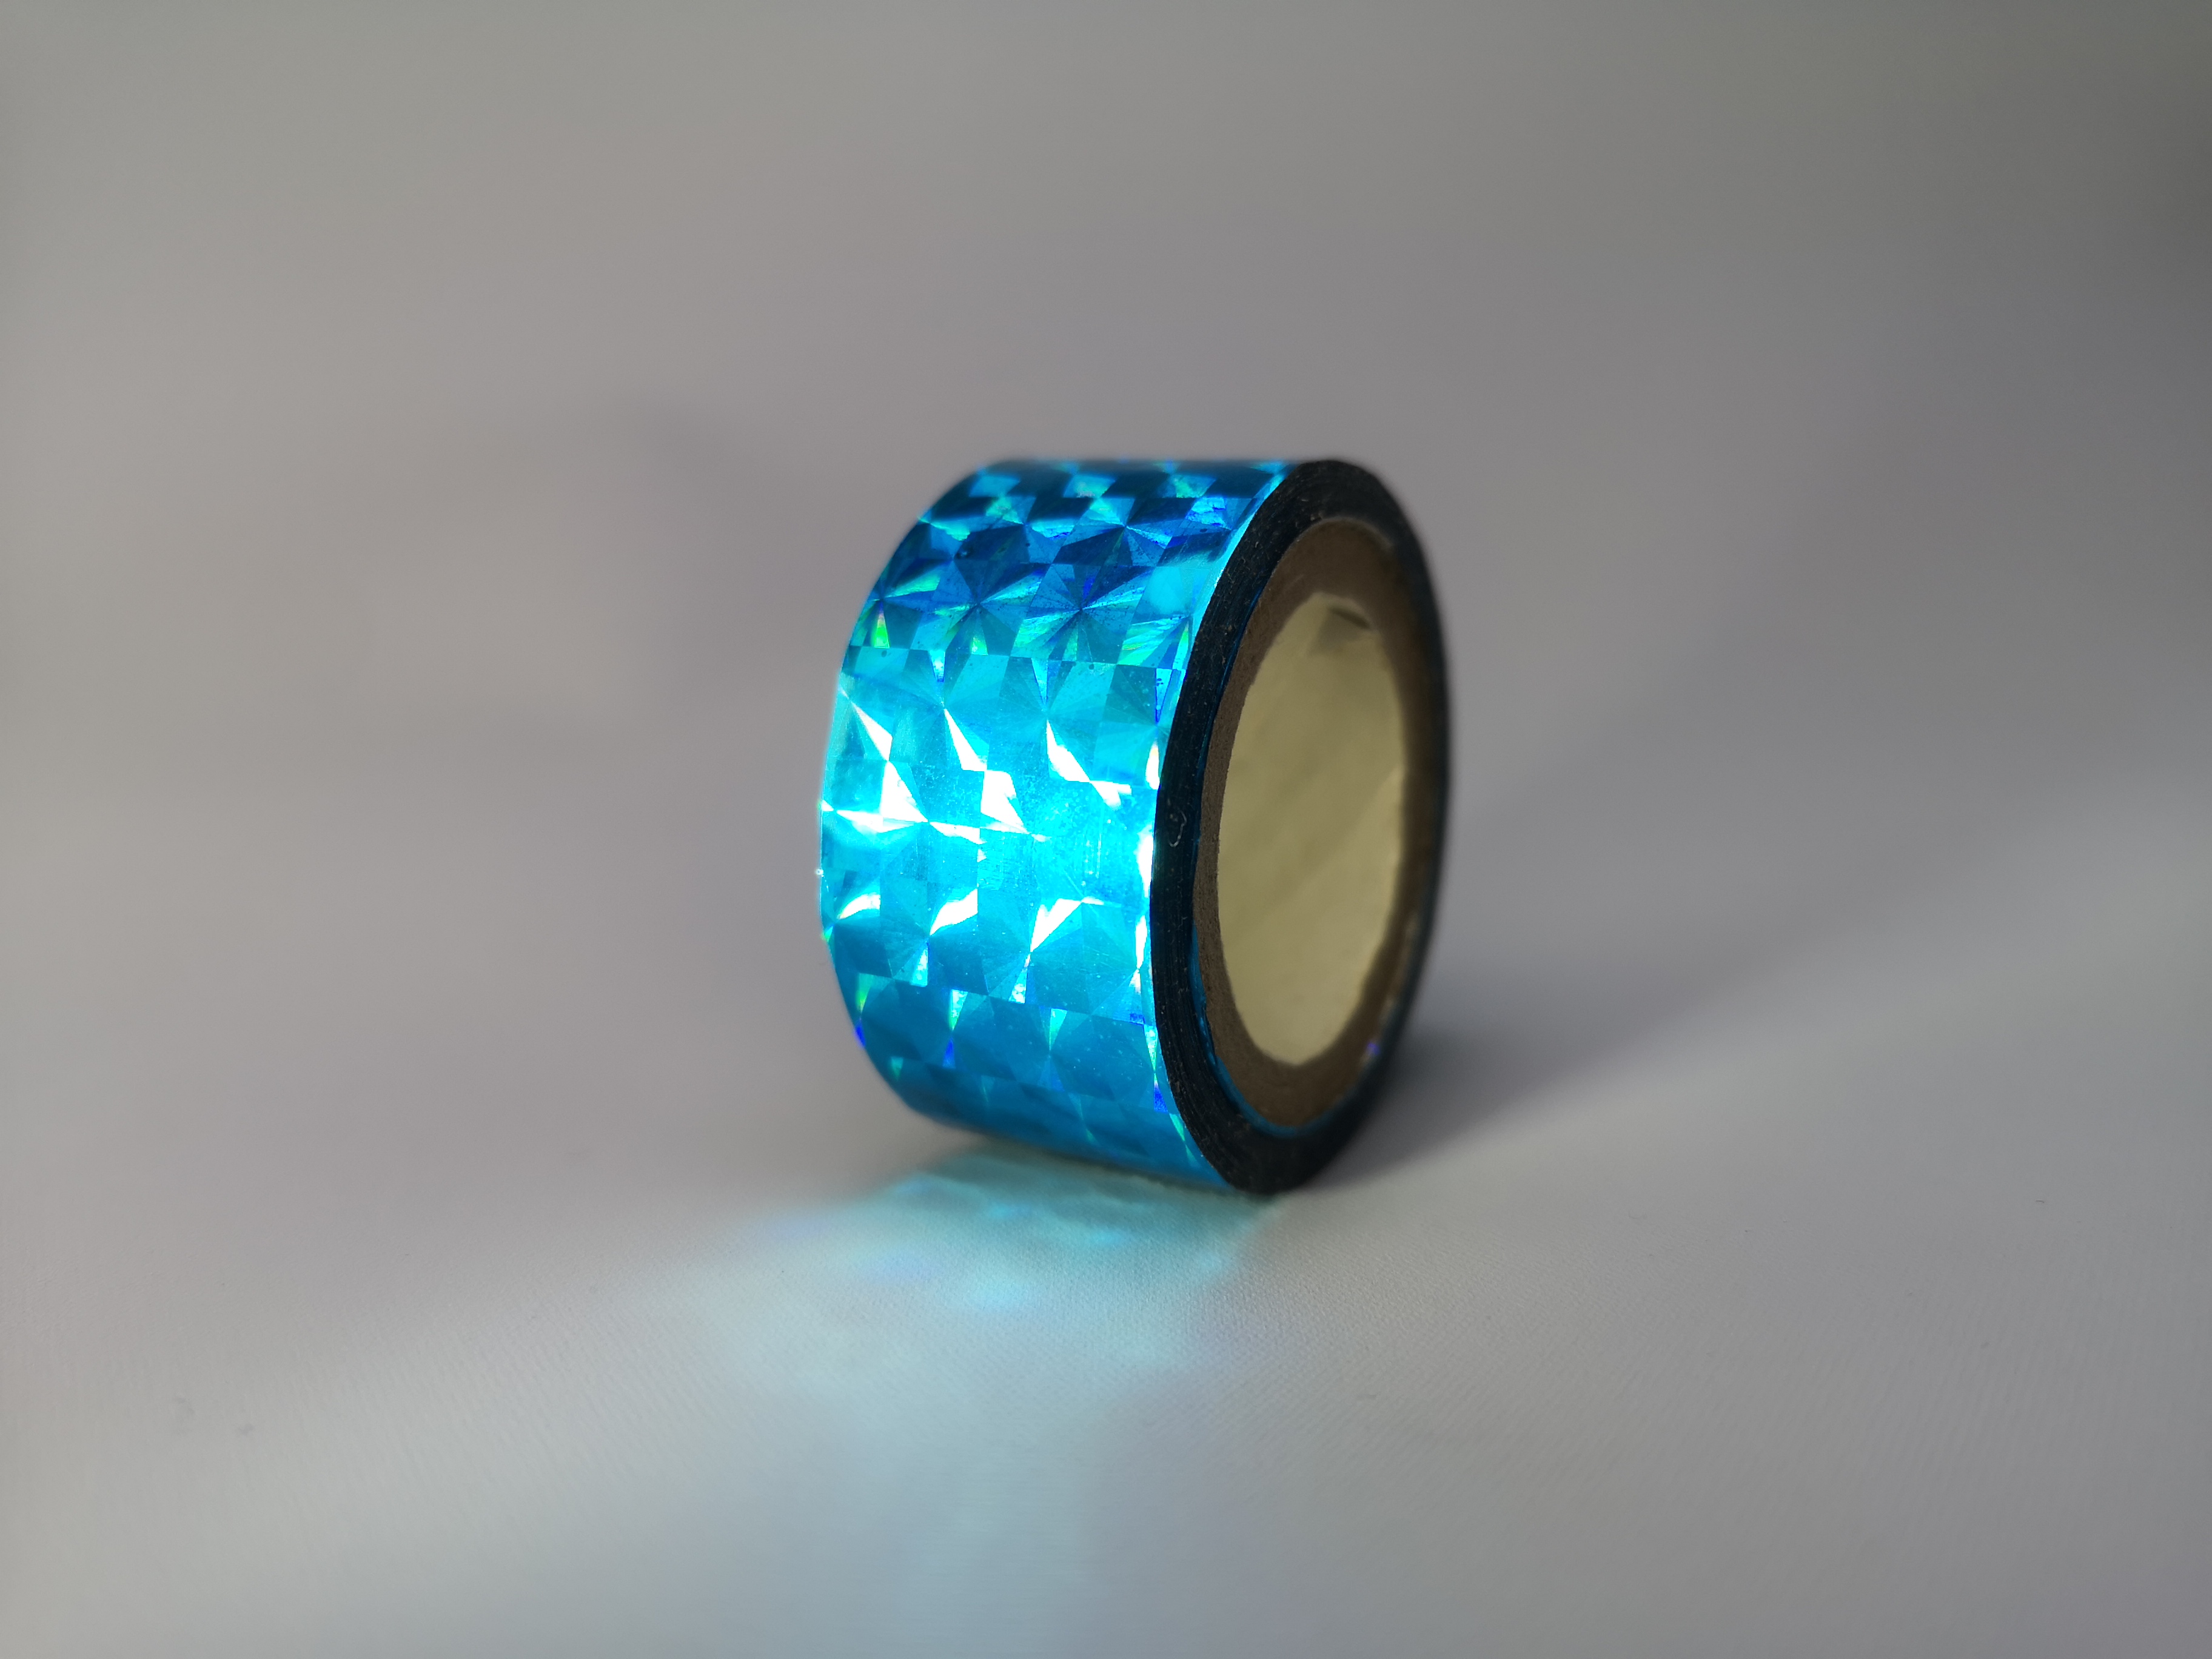 Holografic Prisma Teal 11m Deco-Tape